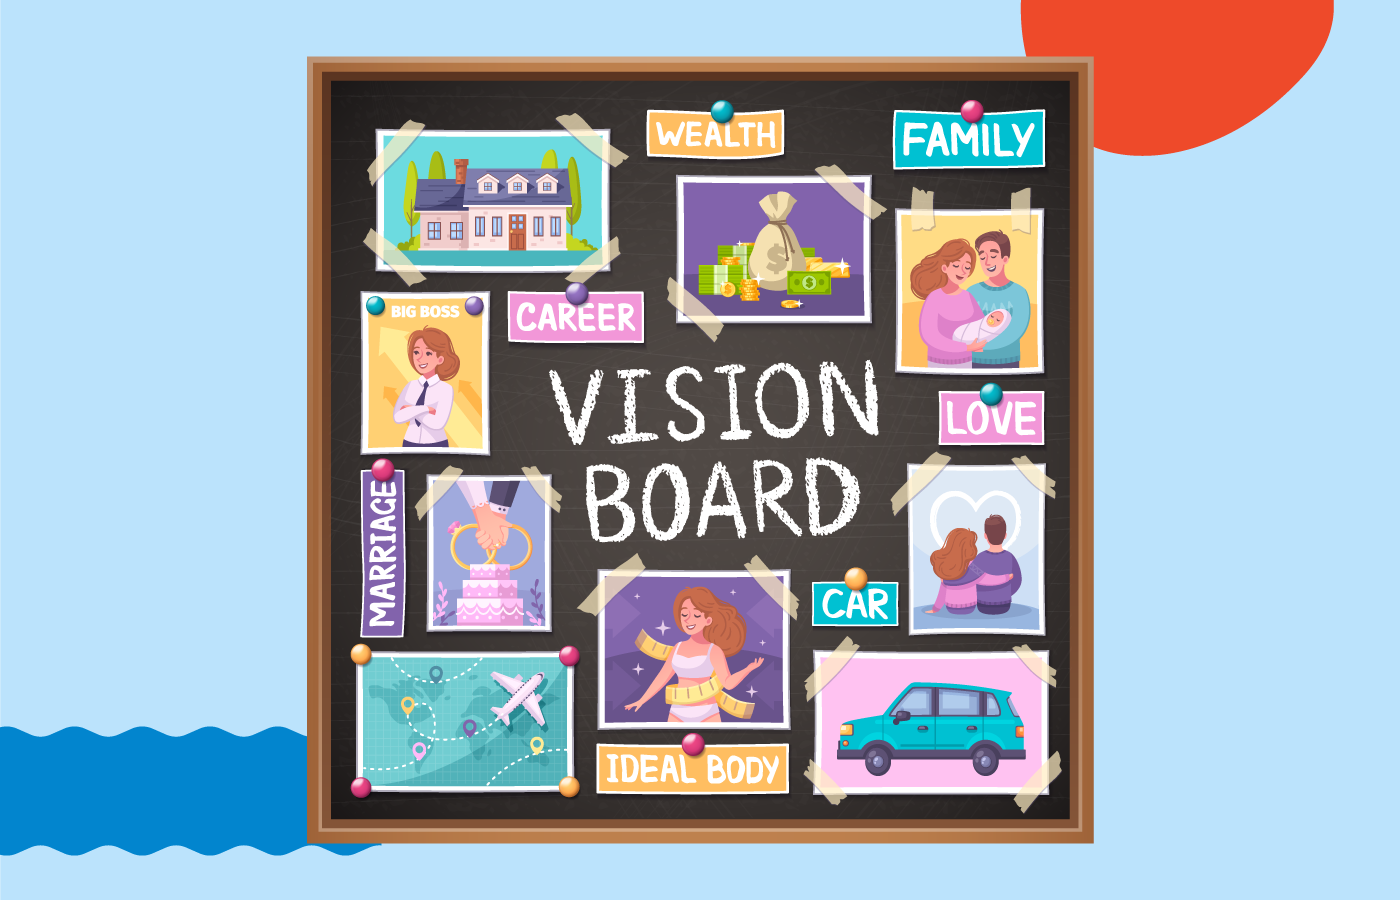 Vision Board Playbook